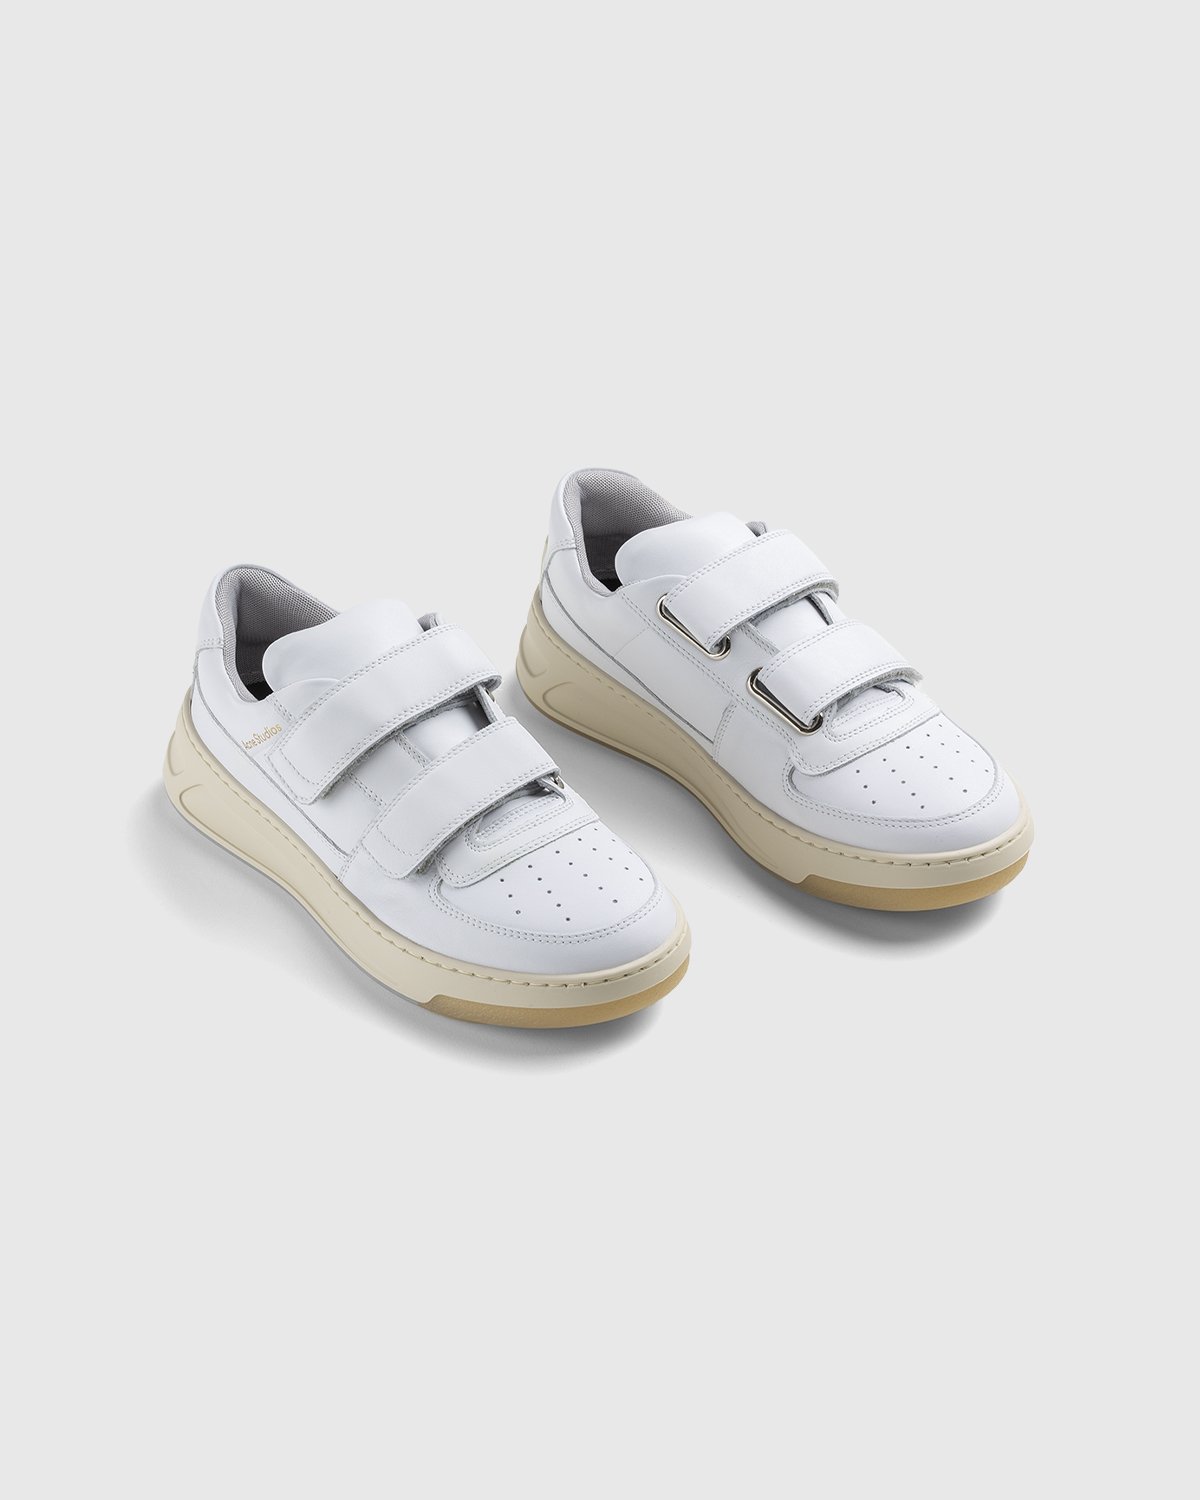 Acne Studios - Perey Velcro Strap Sneakers White - Footwear - White - Image 3